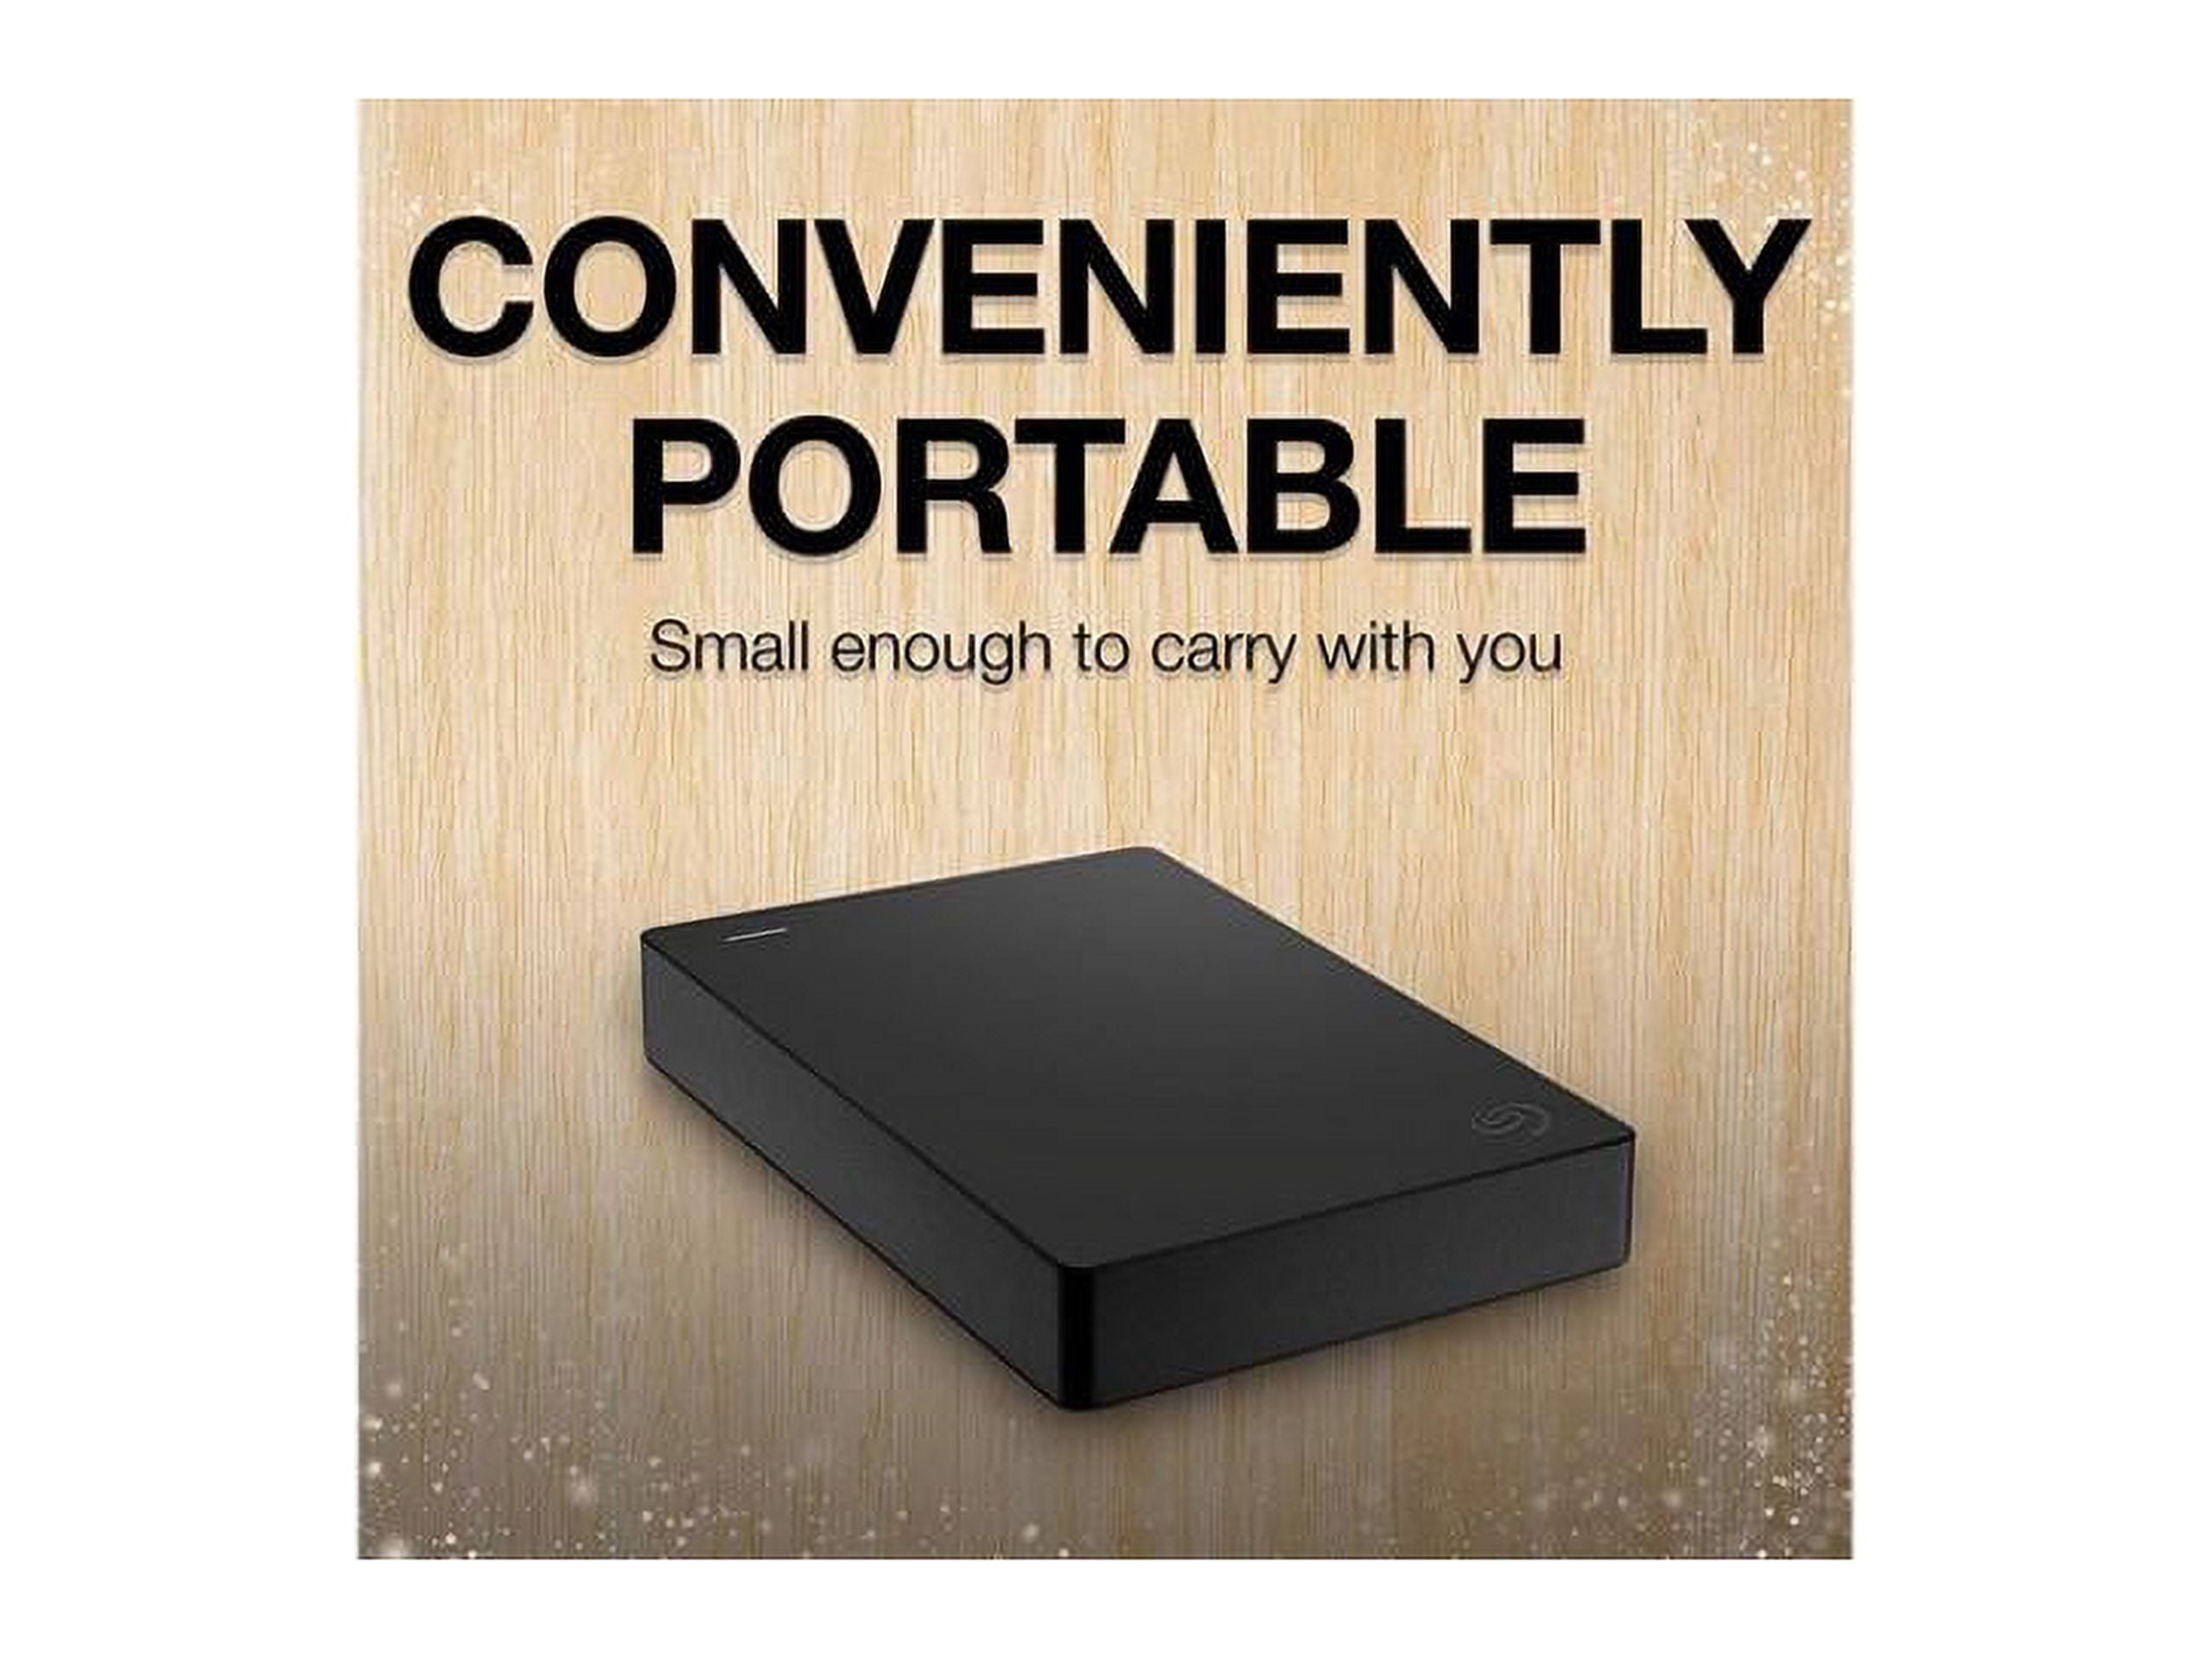 Seagate Portable 5TB External Hard Drive HDD – USB 3.0 for PC, Mac, PS4, &  Xbox - 1-Year Rescue Service (STGX5000400), Black